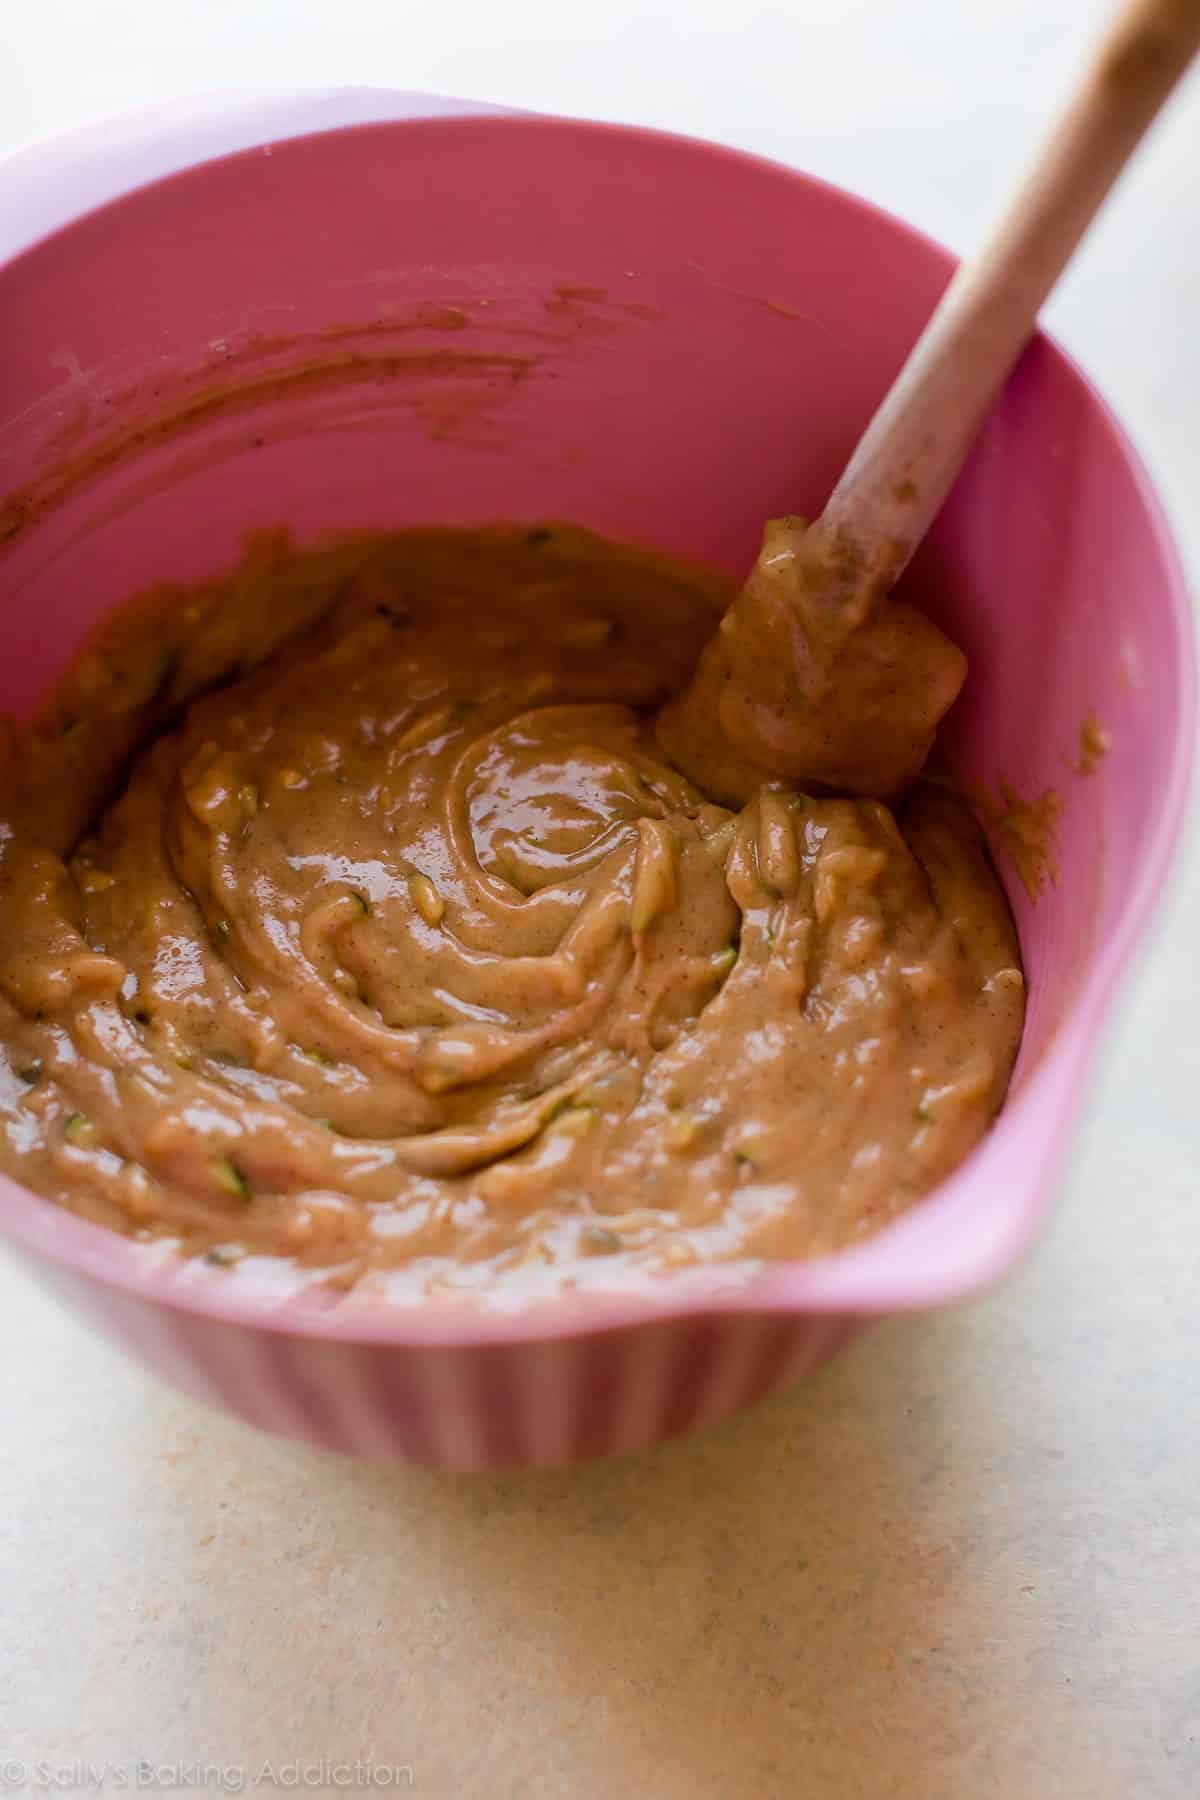 Zucchini crumb cake batter in pink mixing bowl